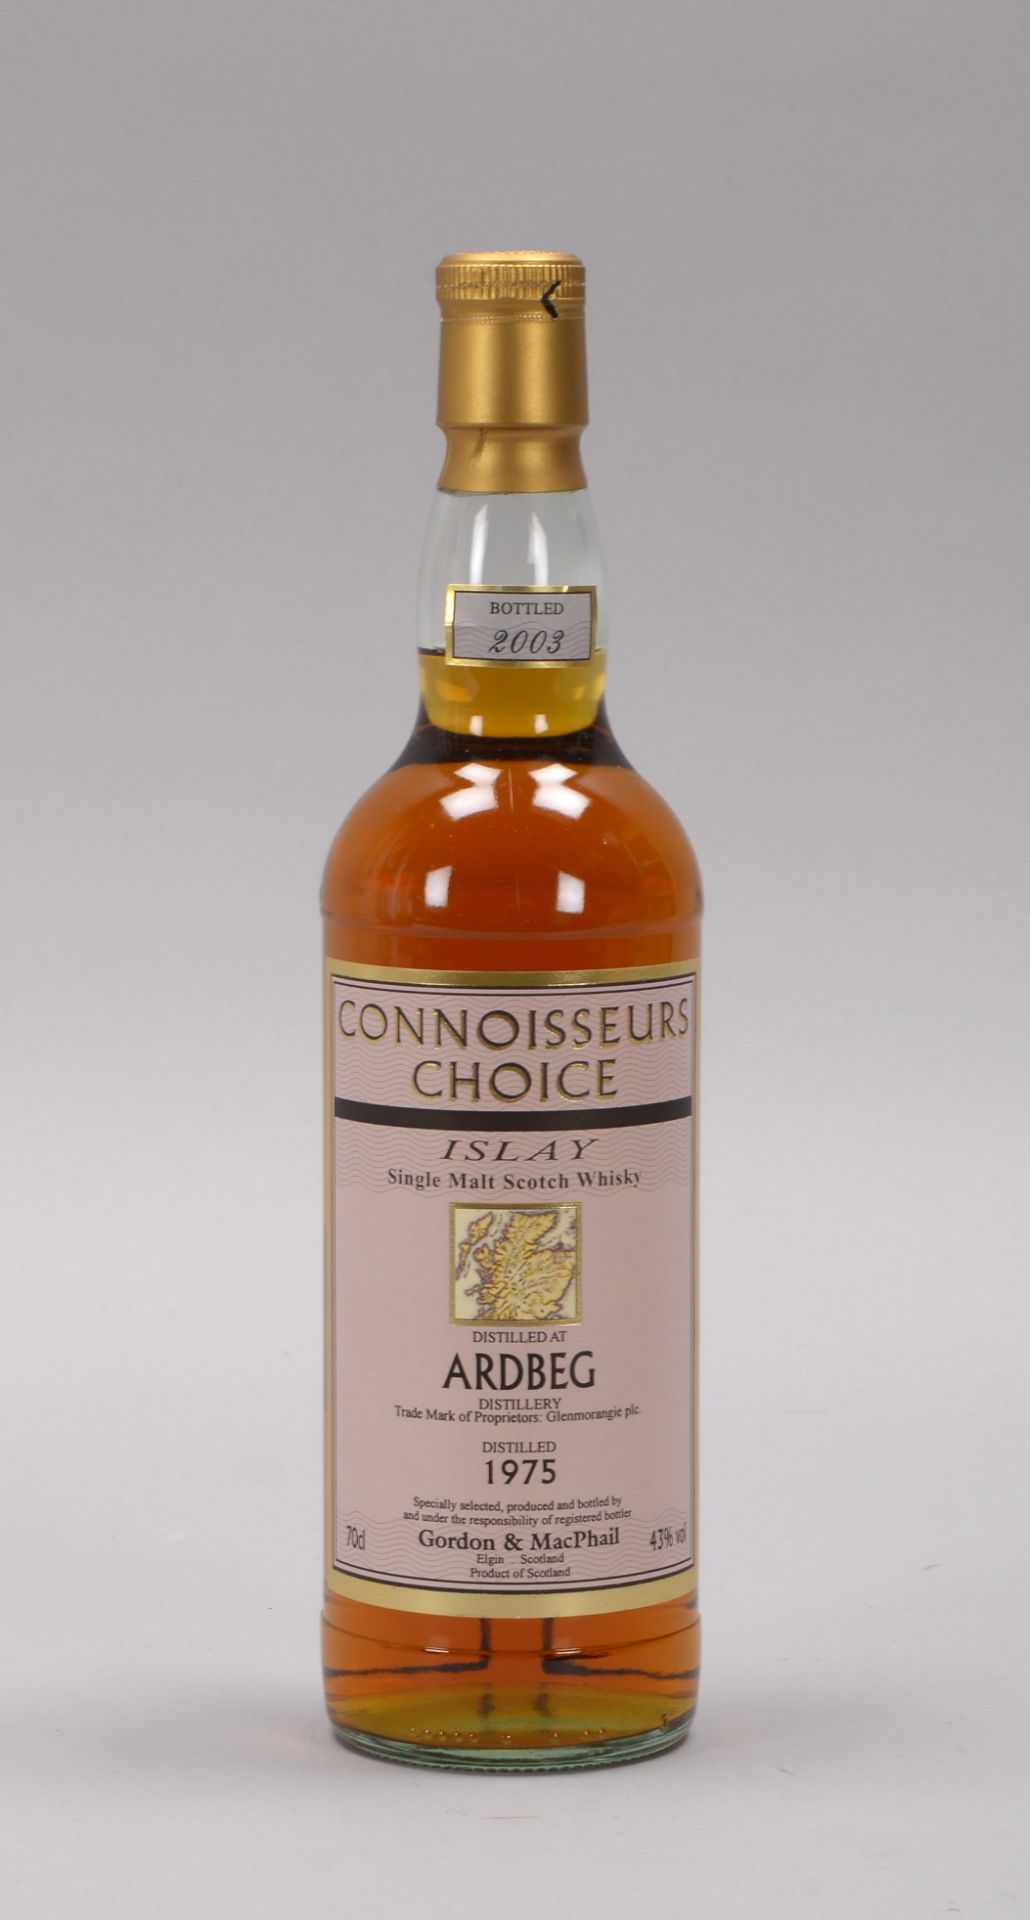 Sammlerwhisky: 'Ardberg Islay Single Malt Scotch Whisky', 'Distilled 1975 by Ardberg' und 'bottled